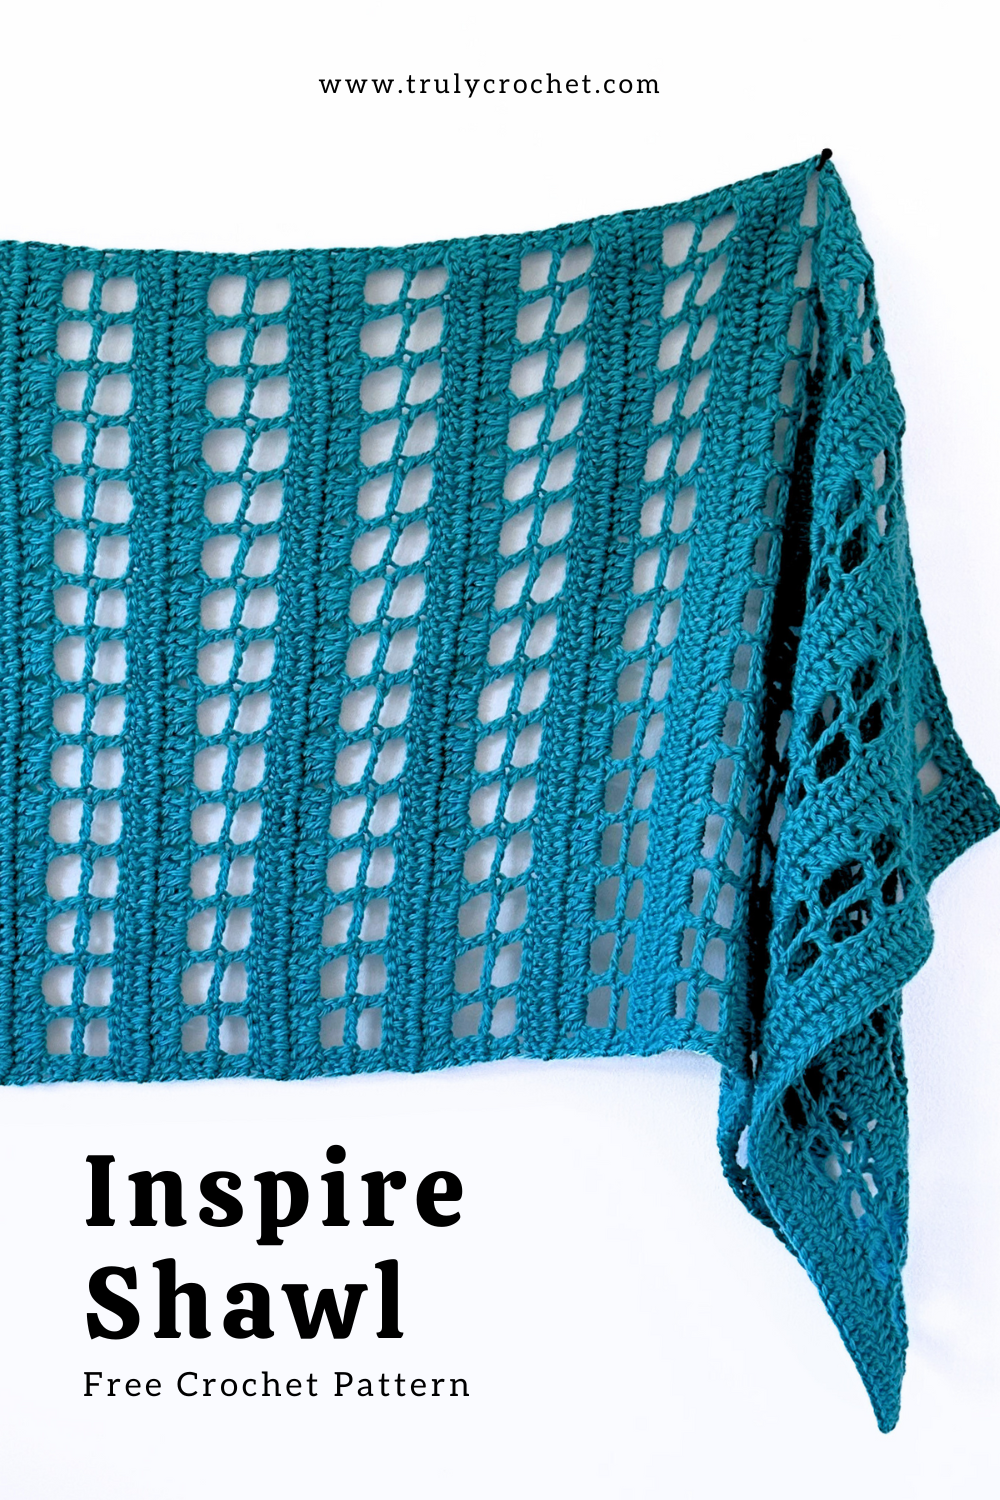 Inspire shawl - Free crochet pattern